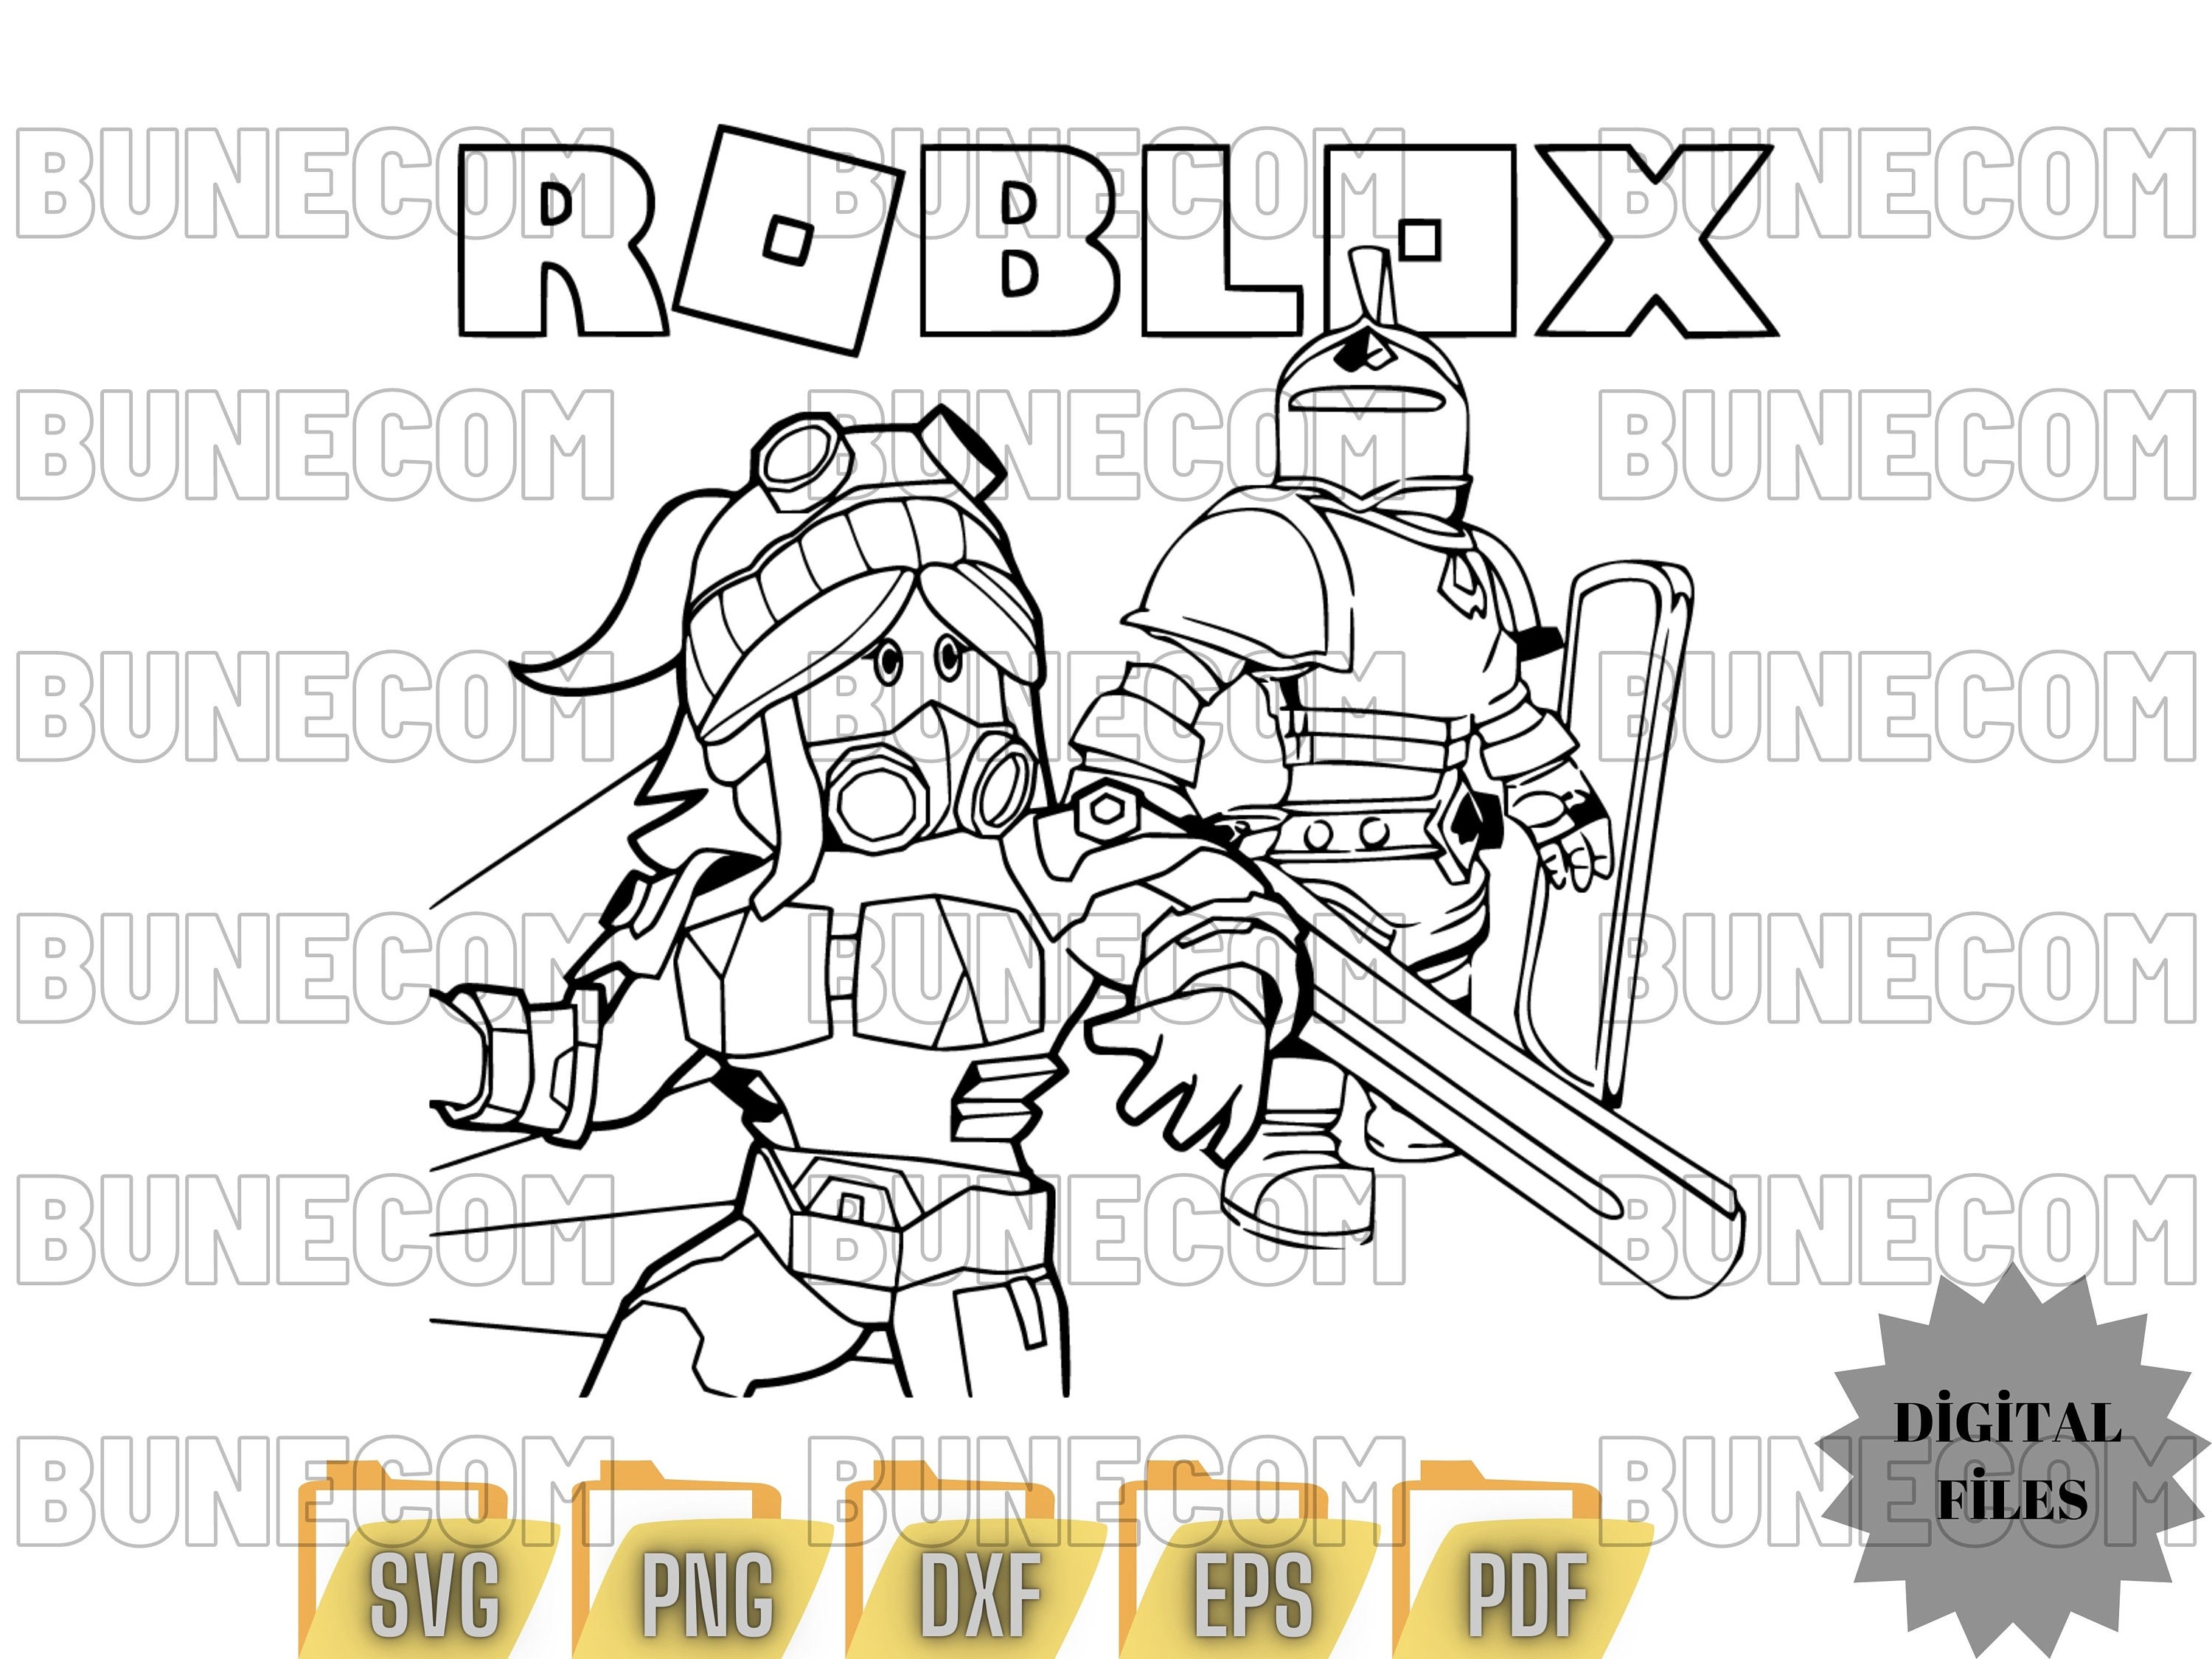 Roblox Svg Character Bundle Set Roblox Emoji Svg Roblox Cut 